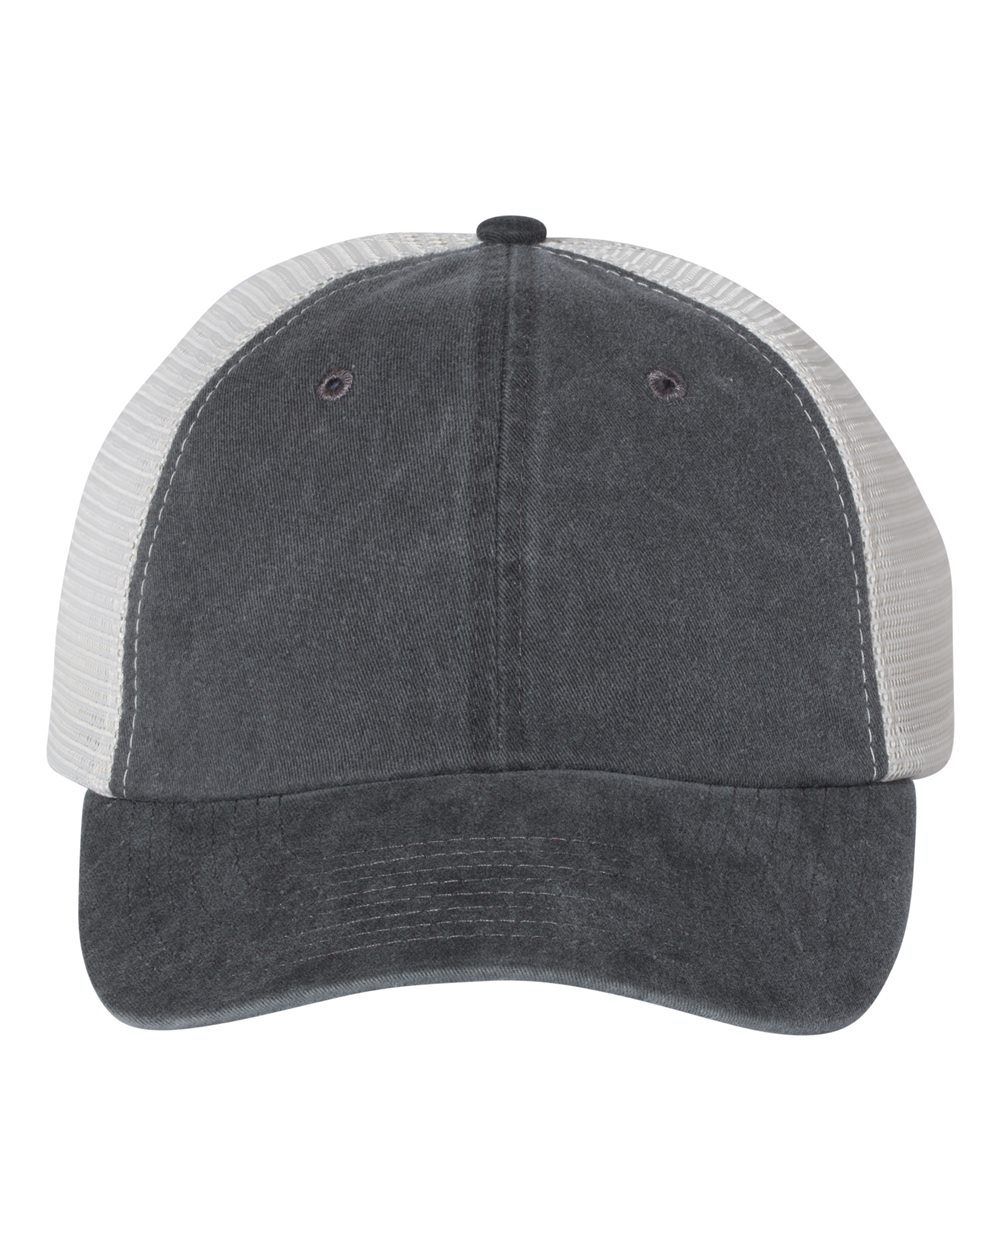 Custom Trucker Hats, Personalized Trucker Caps